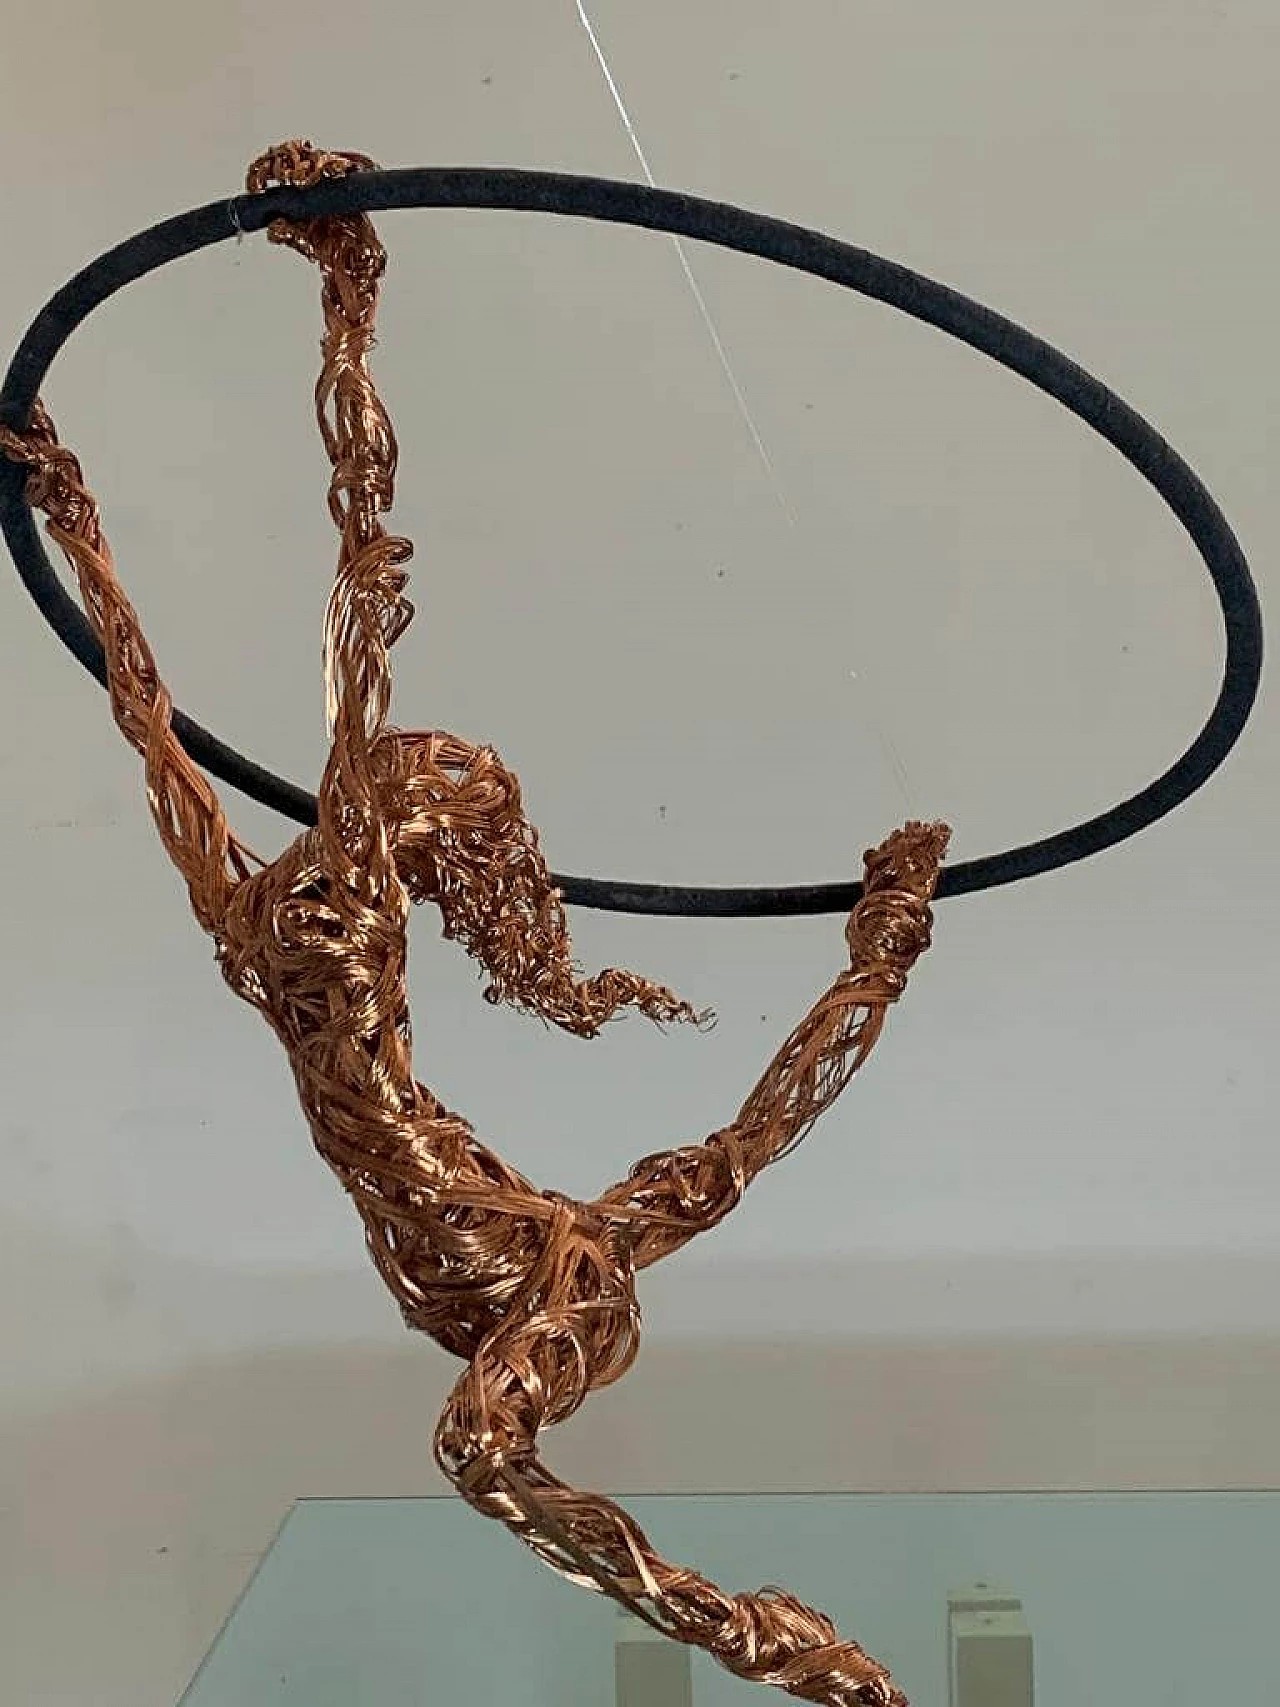 Maria Vittoria Urbinati, acrobat woman, copper wire sculpture, 2010 17